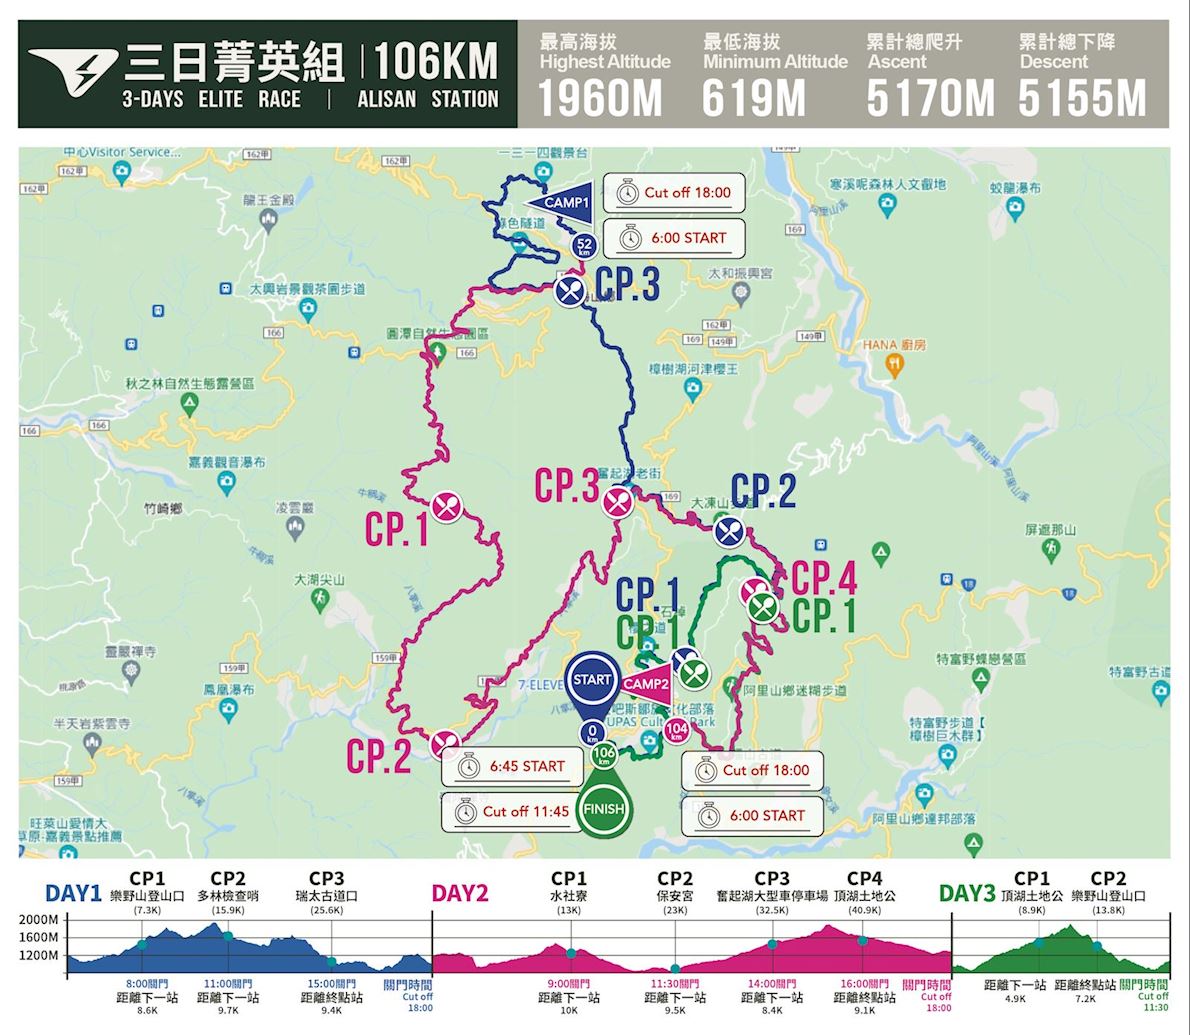 SUPERACE ULTRA MARATHON – Alishan Station, 106Km Stage race & 21Km Trail race Mappa del percorso